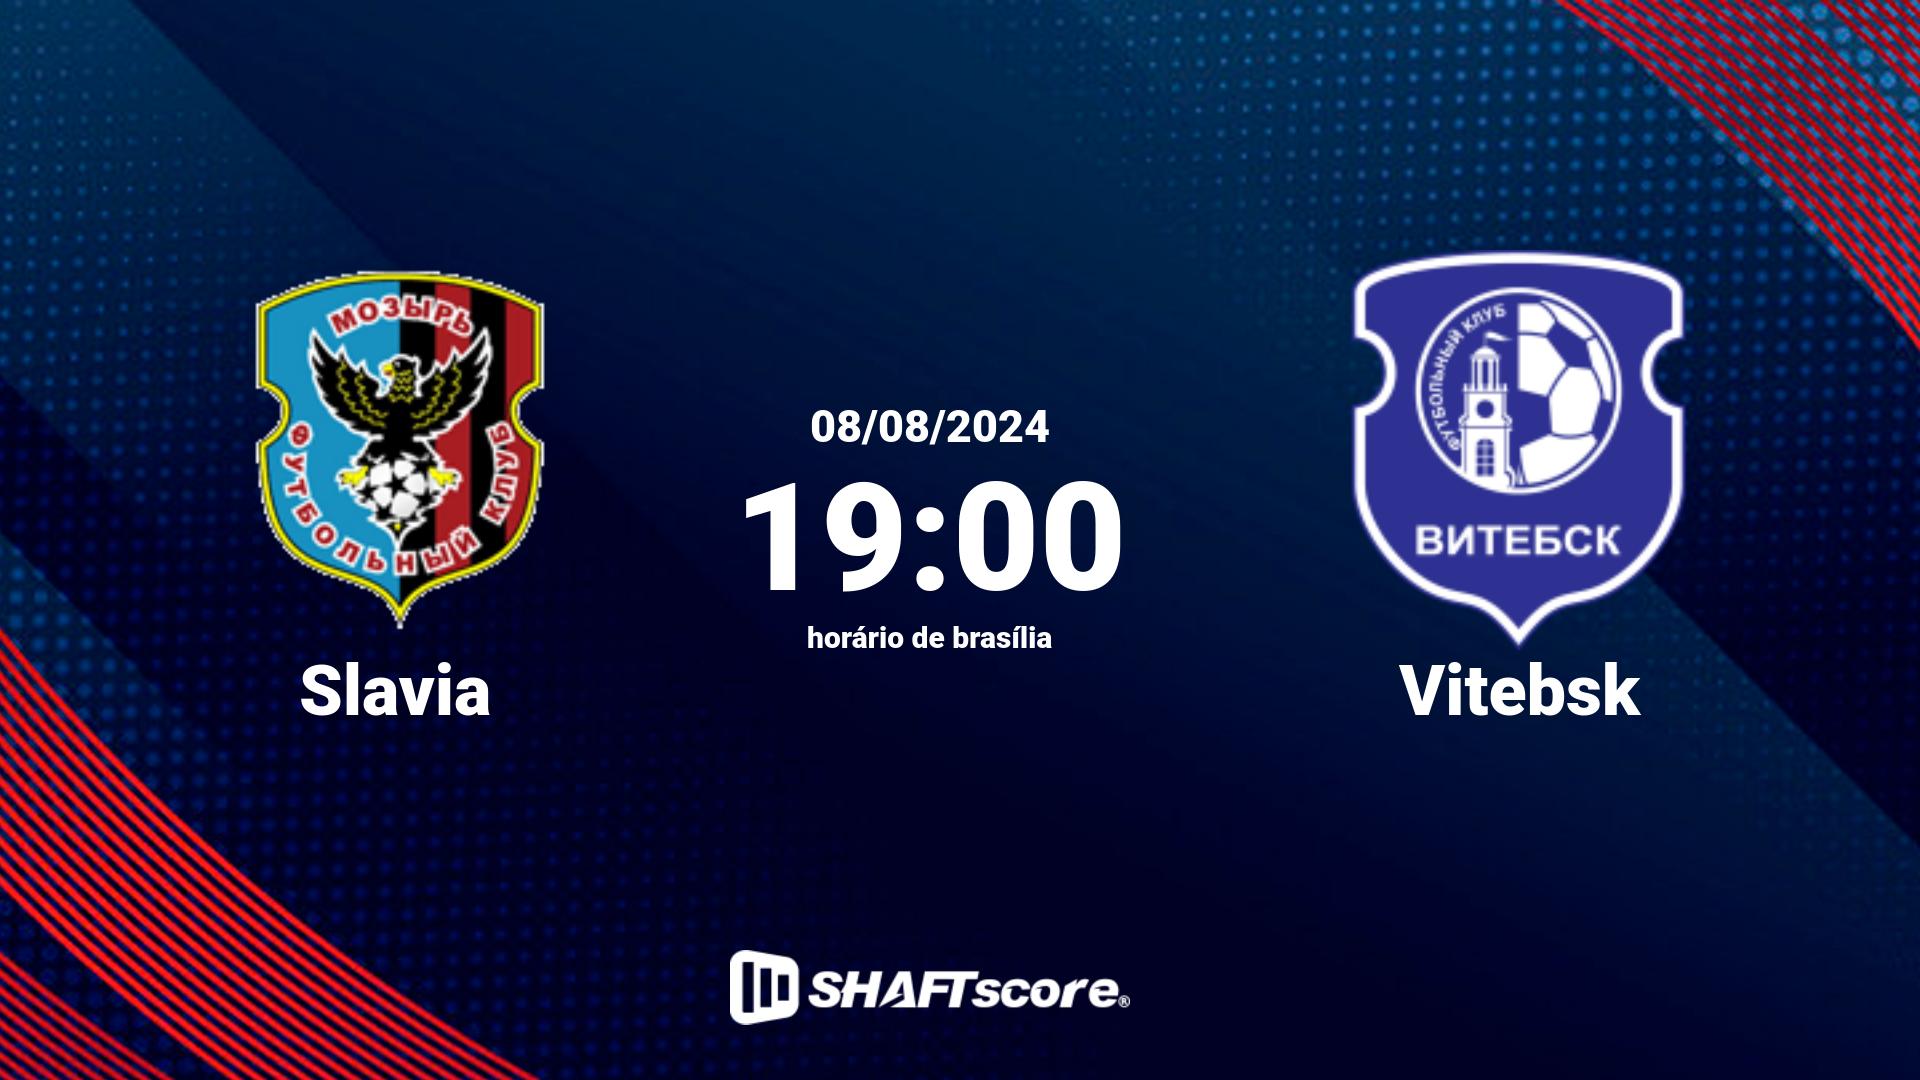 Estatísticas do jogo Slavia vs Vitebsk 08.08 19:00